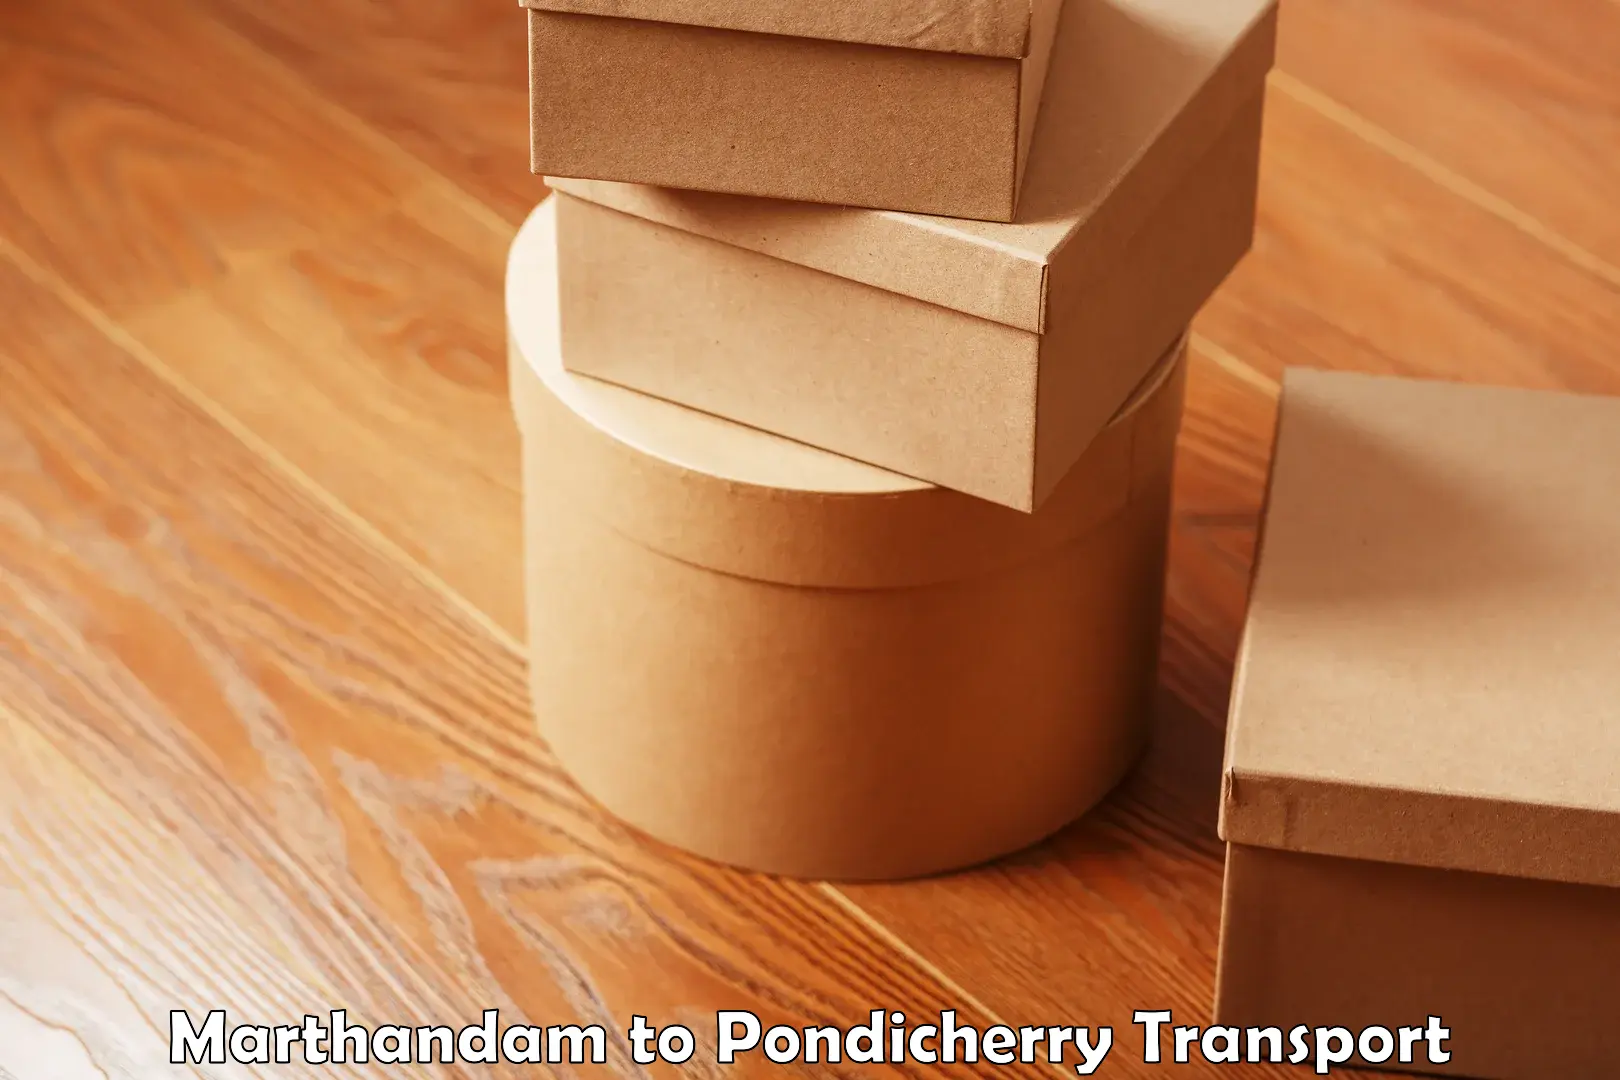 Transport in sharing Marthandam to Pondicherry